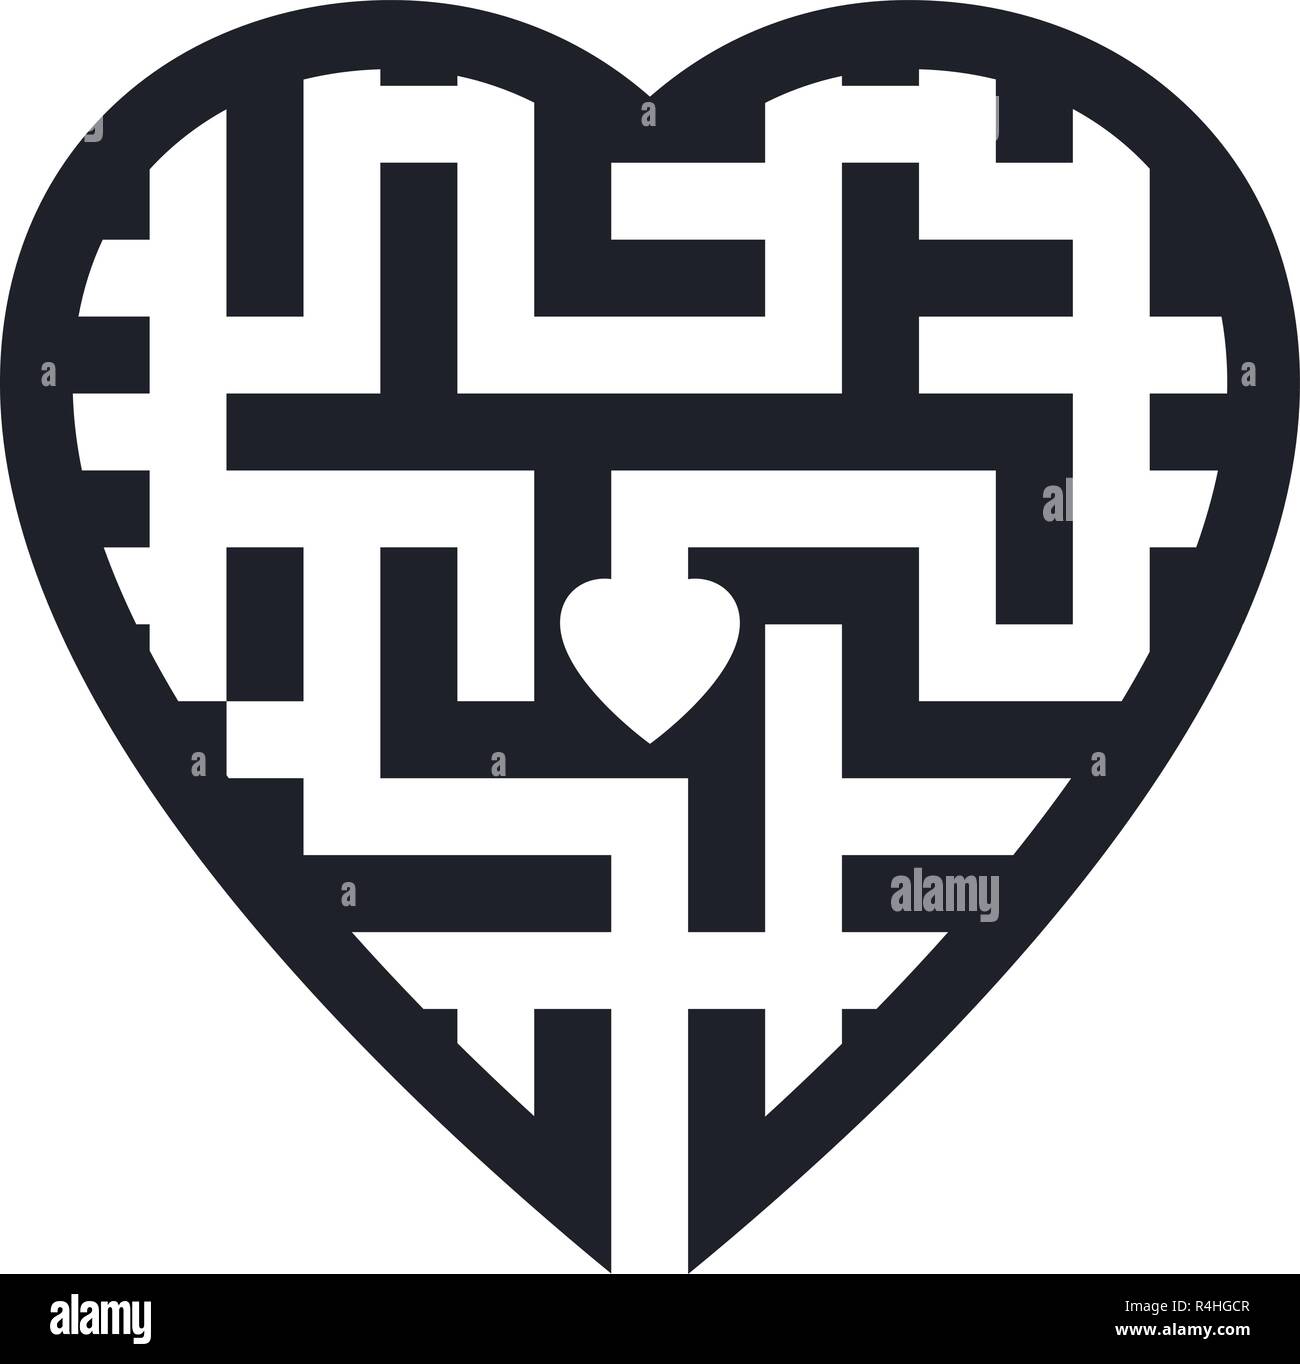 Maze in heart shape Stock Vector